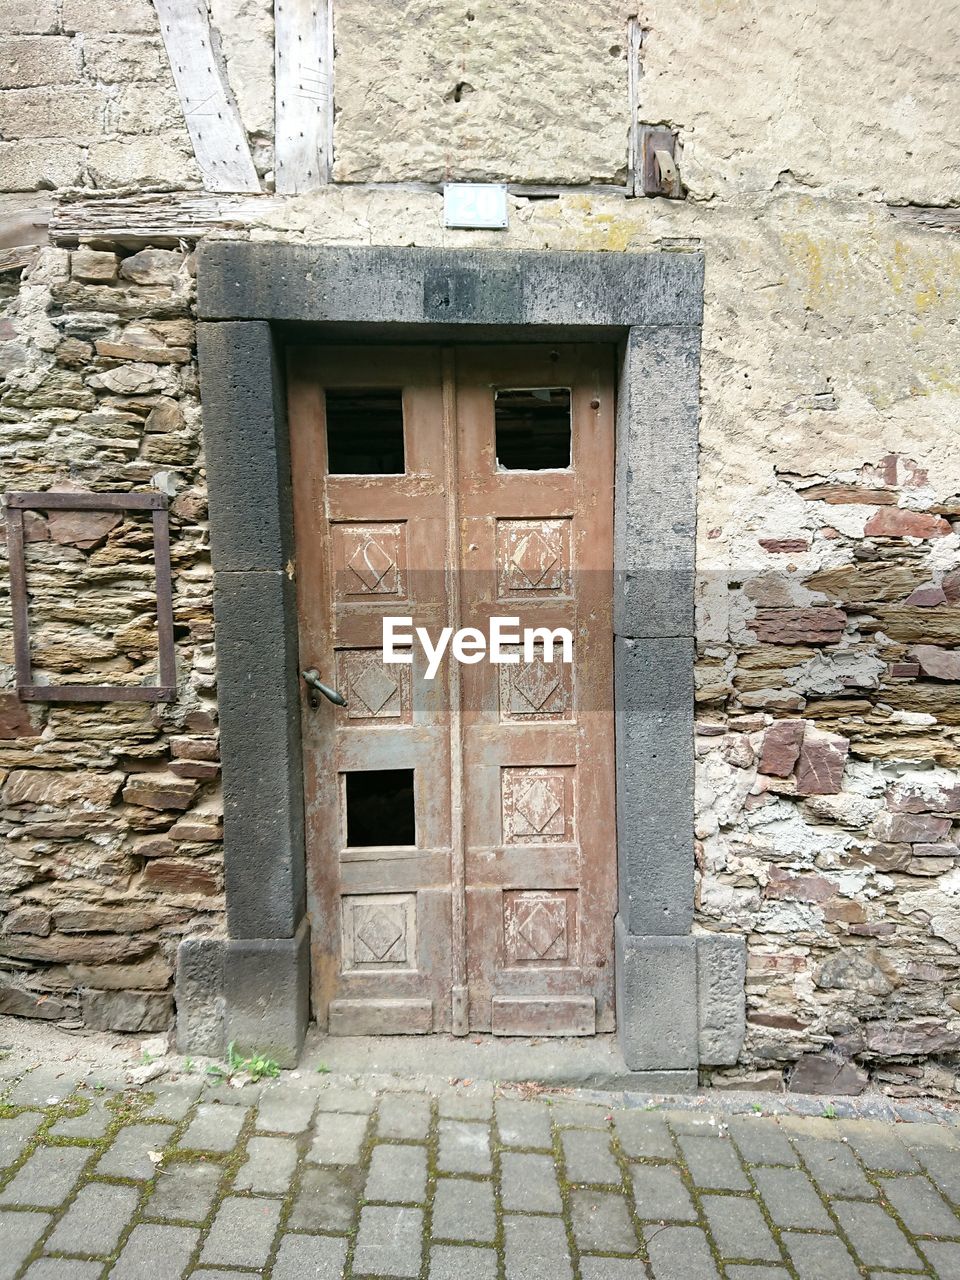 CLOSE-UP OF DOOR WITH BUILDING